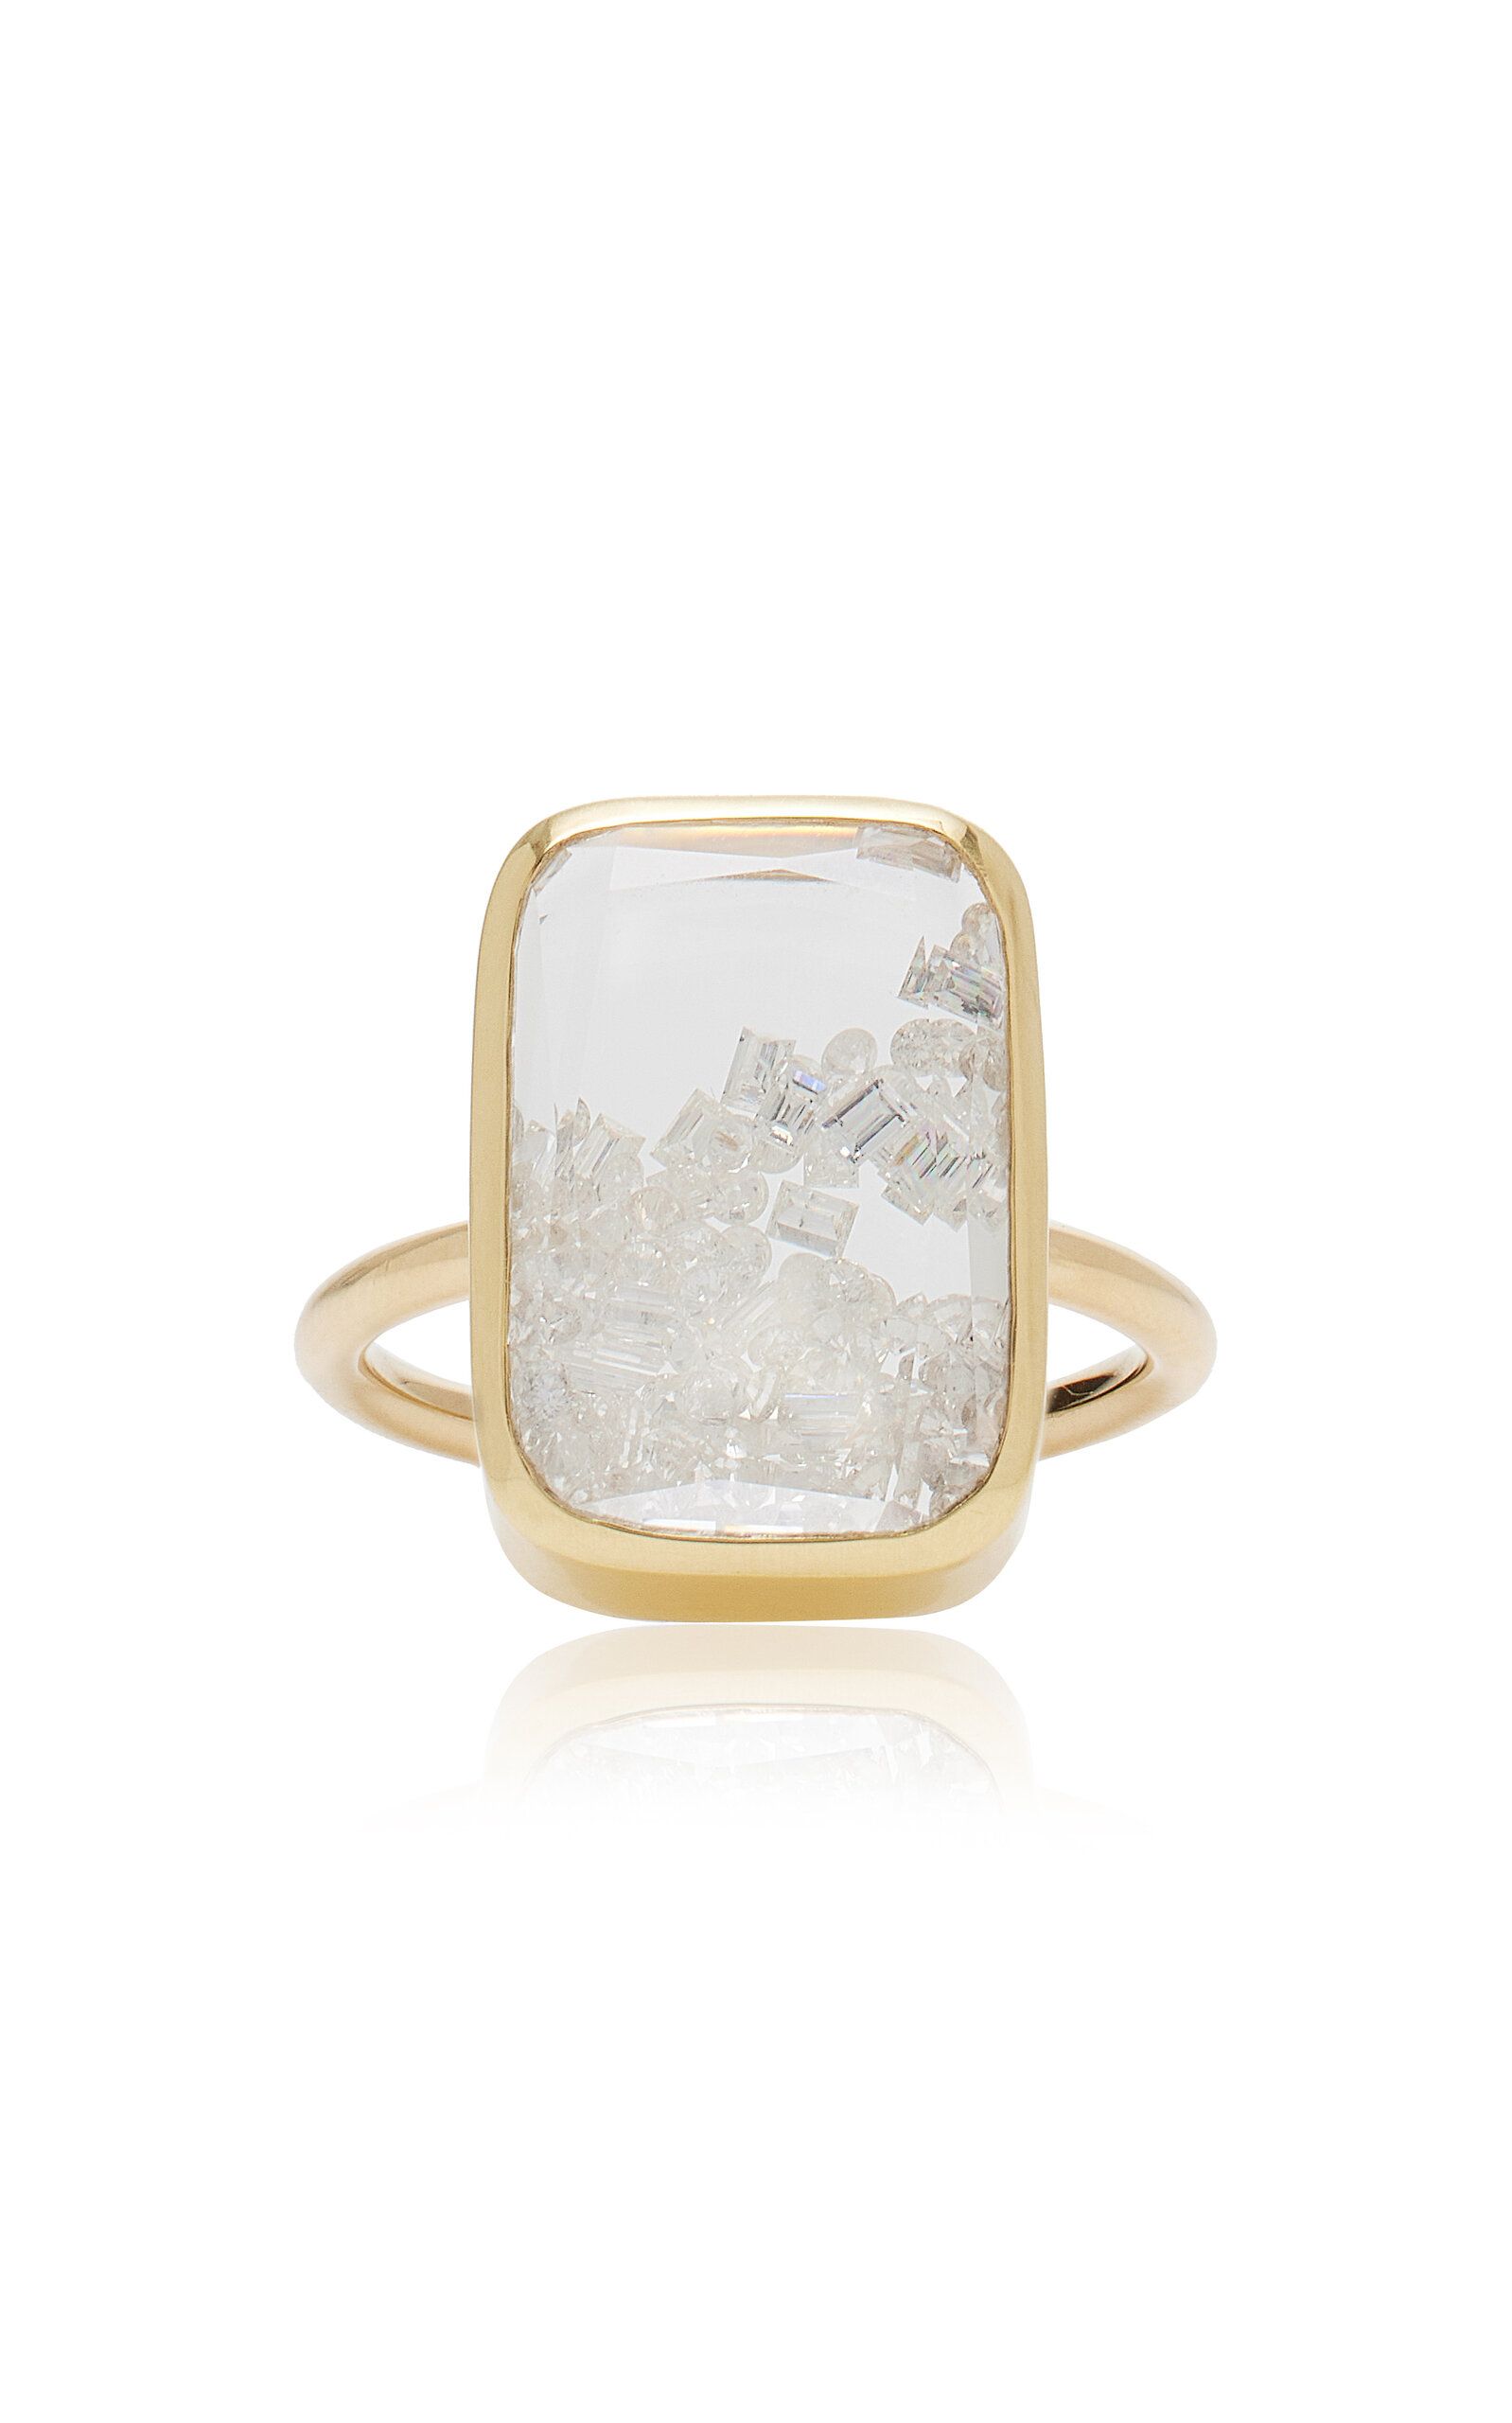 Moritz Glik - Kaleidoscope Shaker 18K Yellow Gold Diamond Ring - White - US 5.5 - Moda Operandi - Gifts For Her | Moda Operandi (Global)